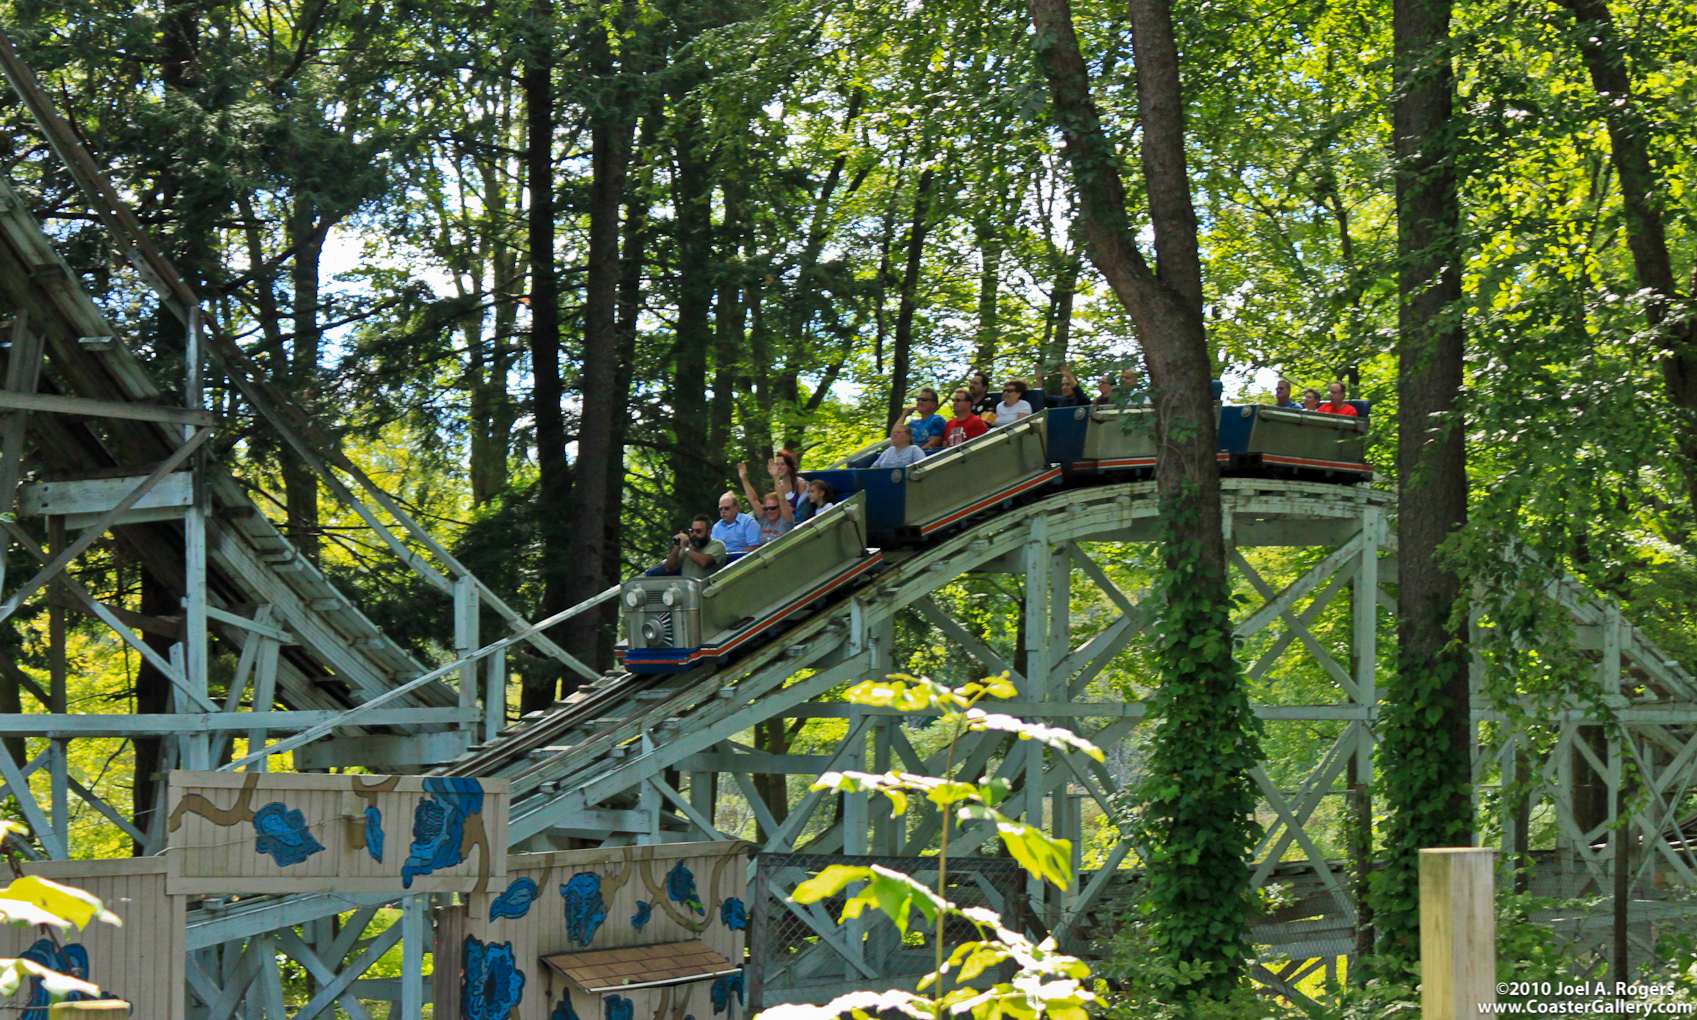 Blue Streak roller coaster